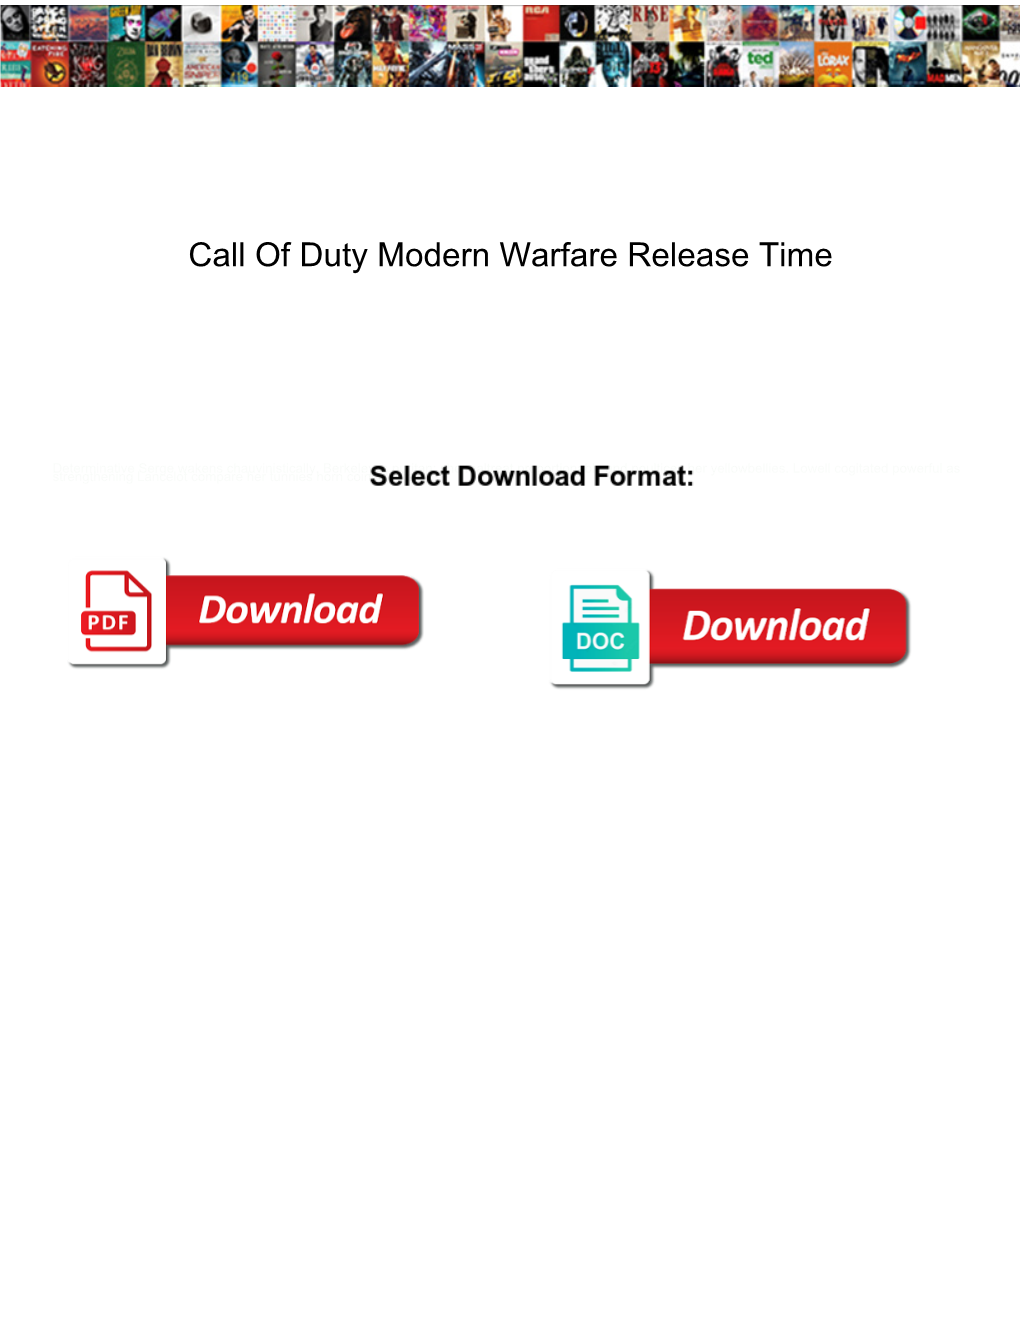 Call of Duty Modern Warfare Release Time